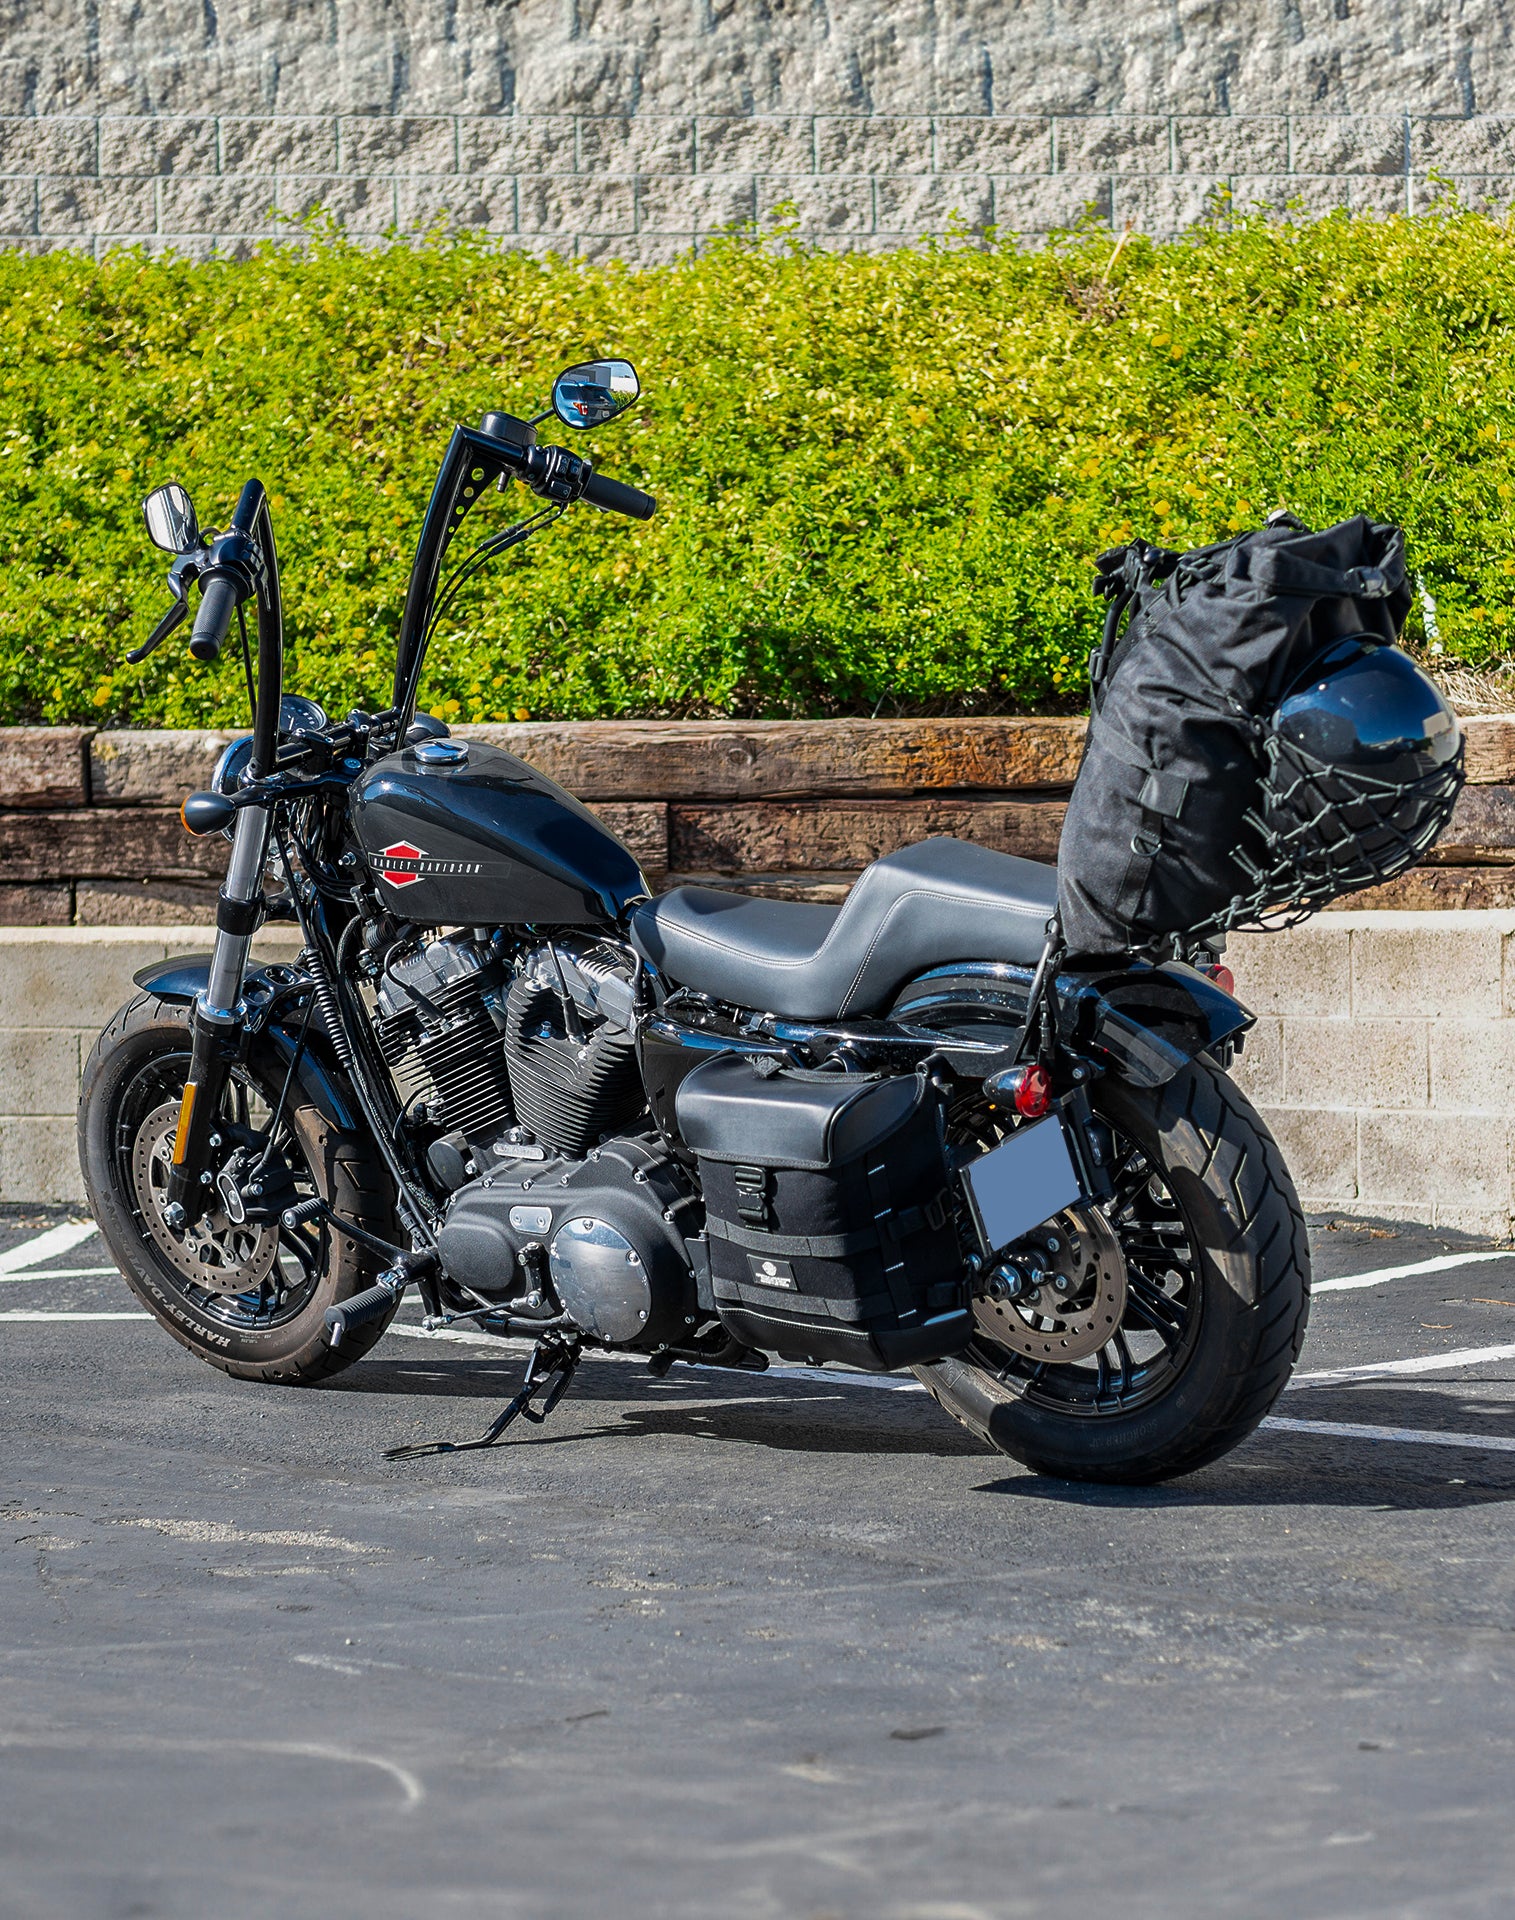 32L - Vanguard Large Dry Harley Davidson Motorcycle Sissy Bar Bag